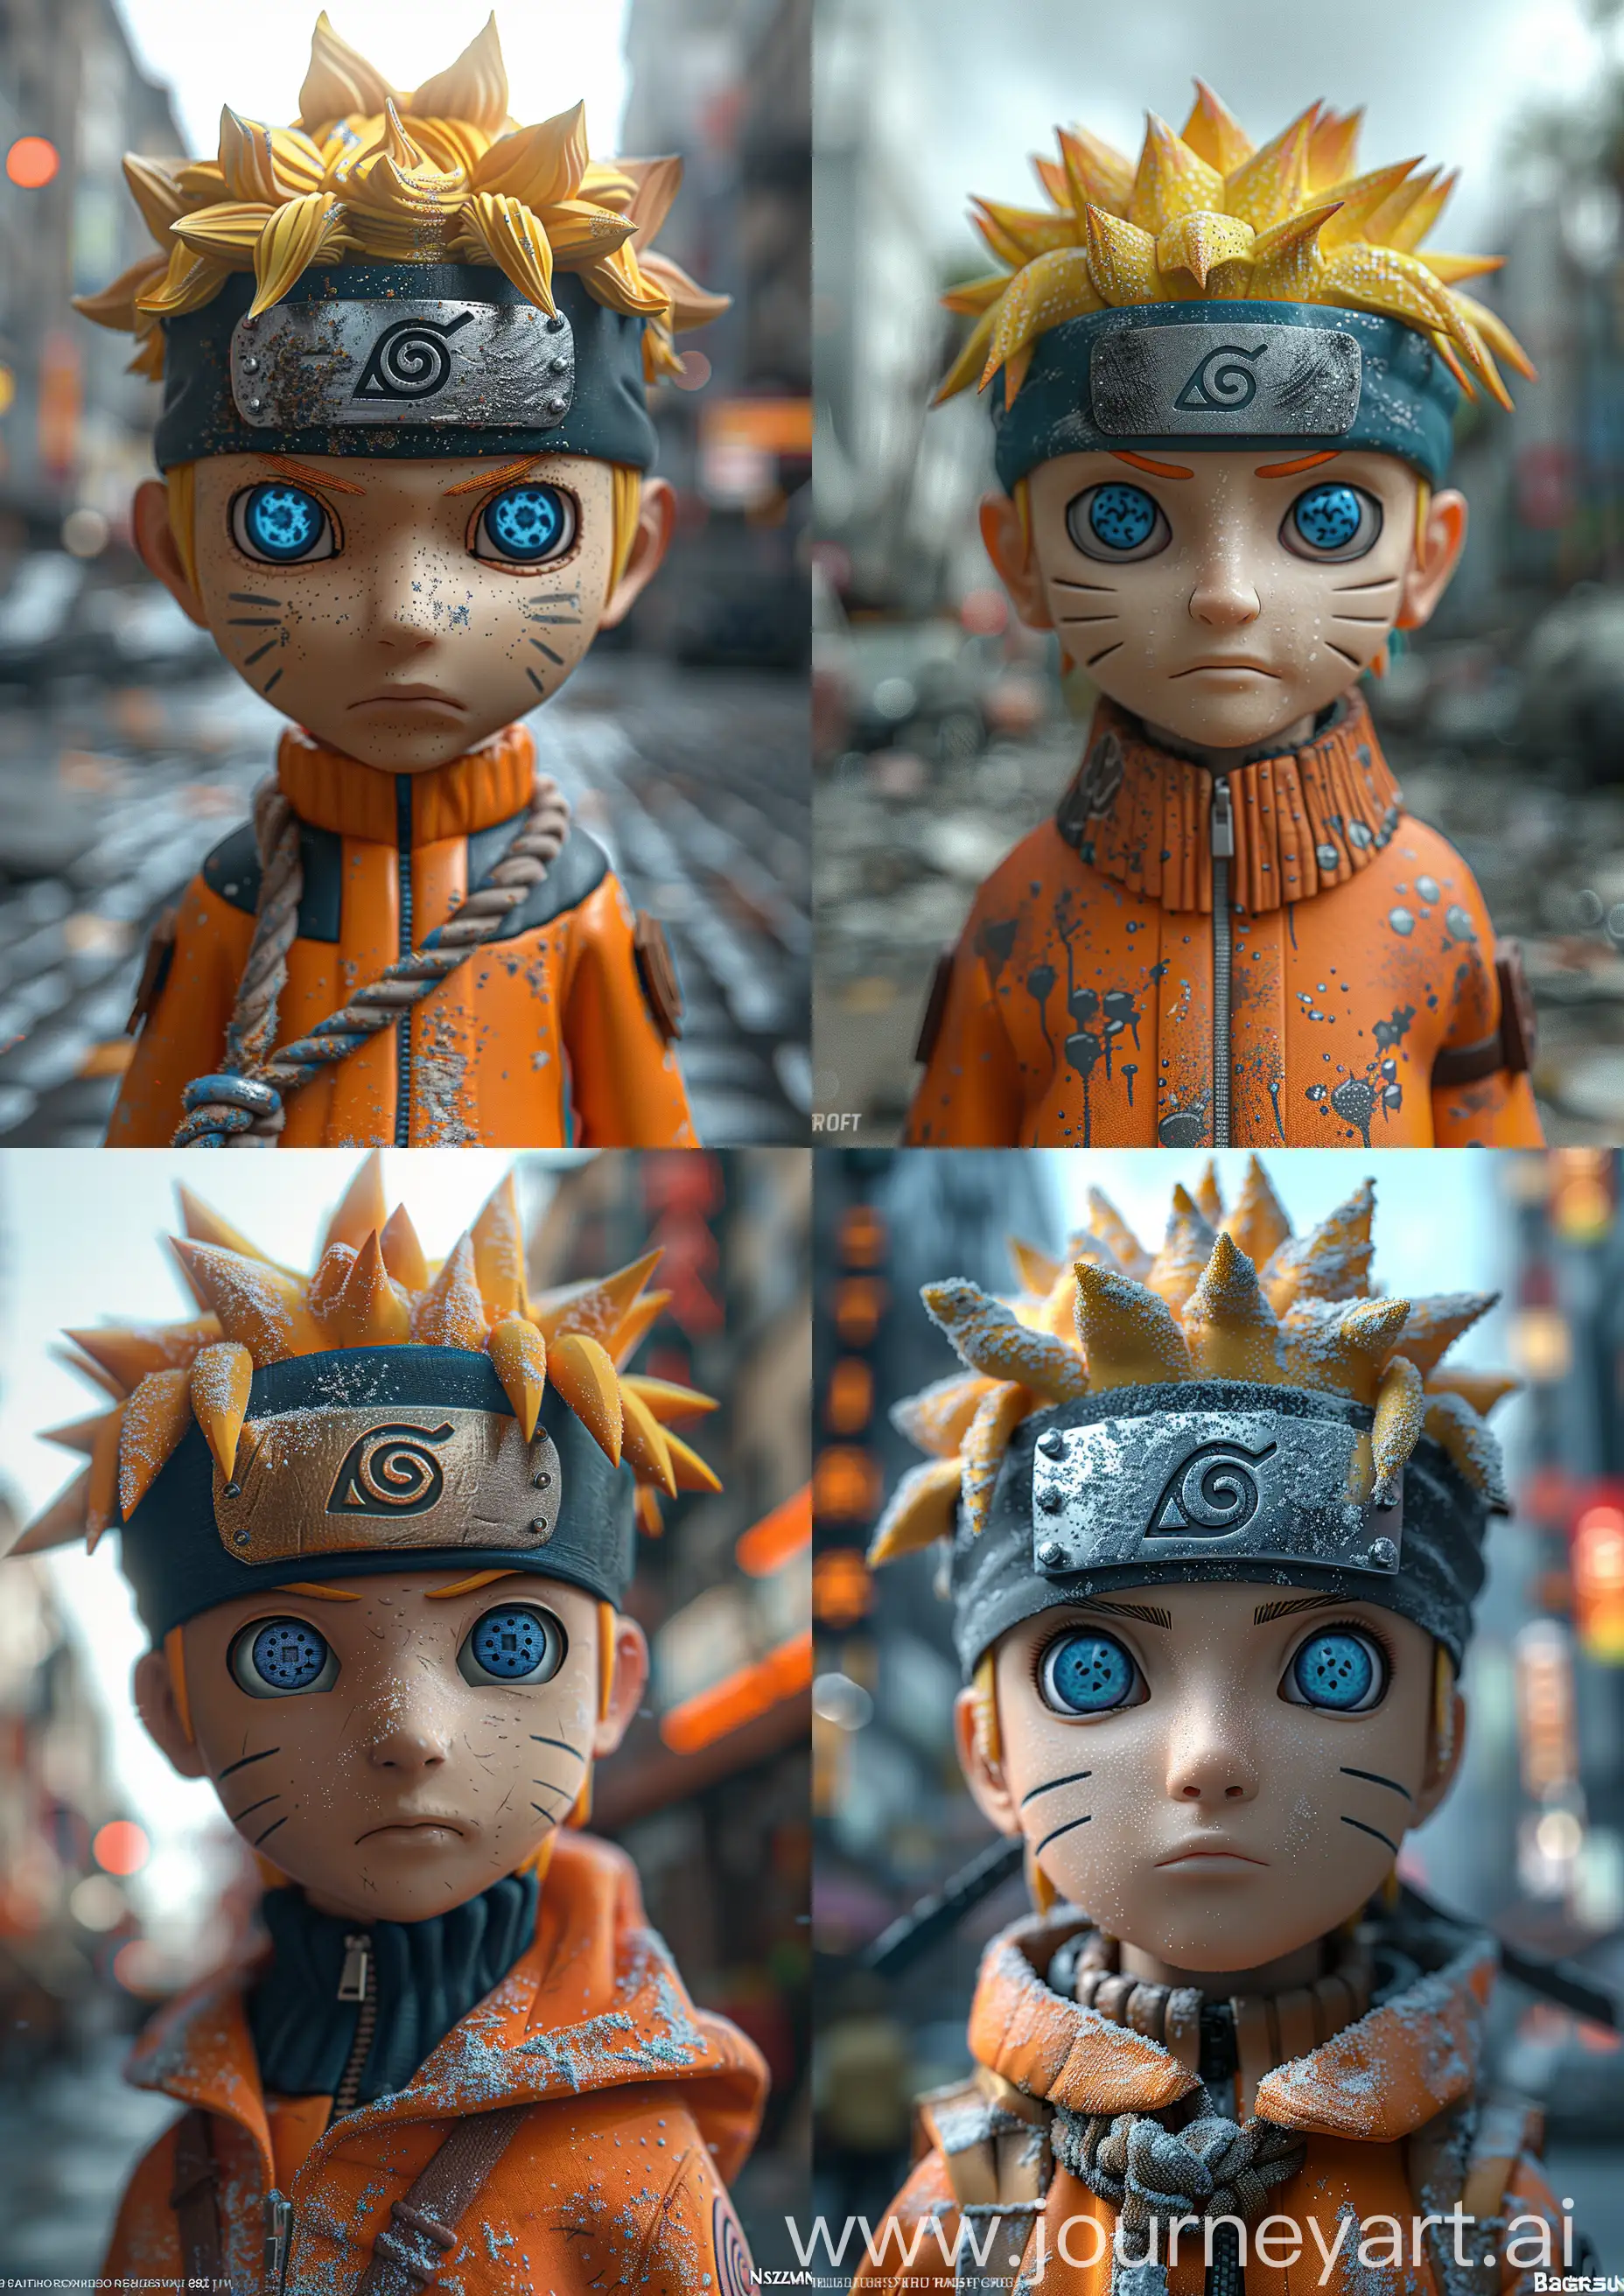 Naruto-Uzumaki-HyperRealistic-3D-Anime-Portrait-in-Urban-Setting